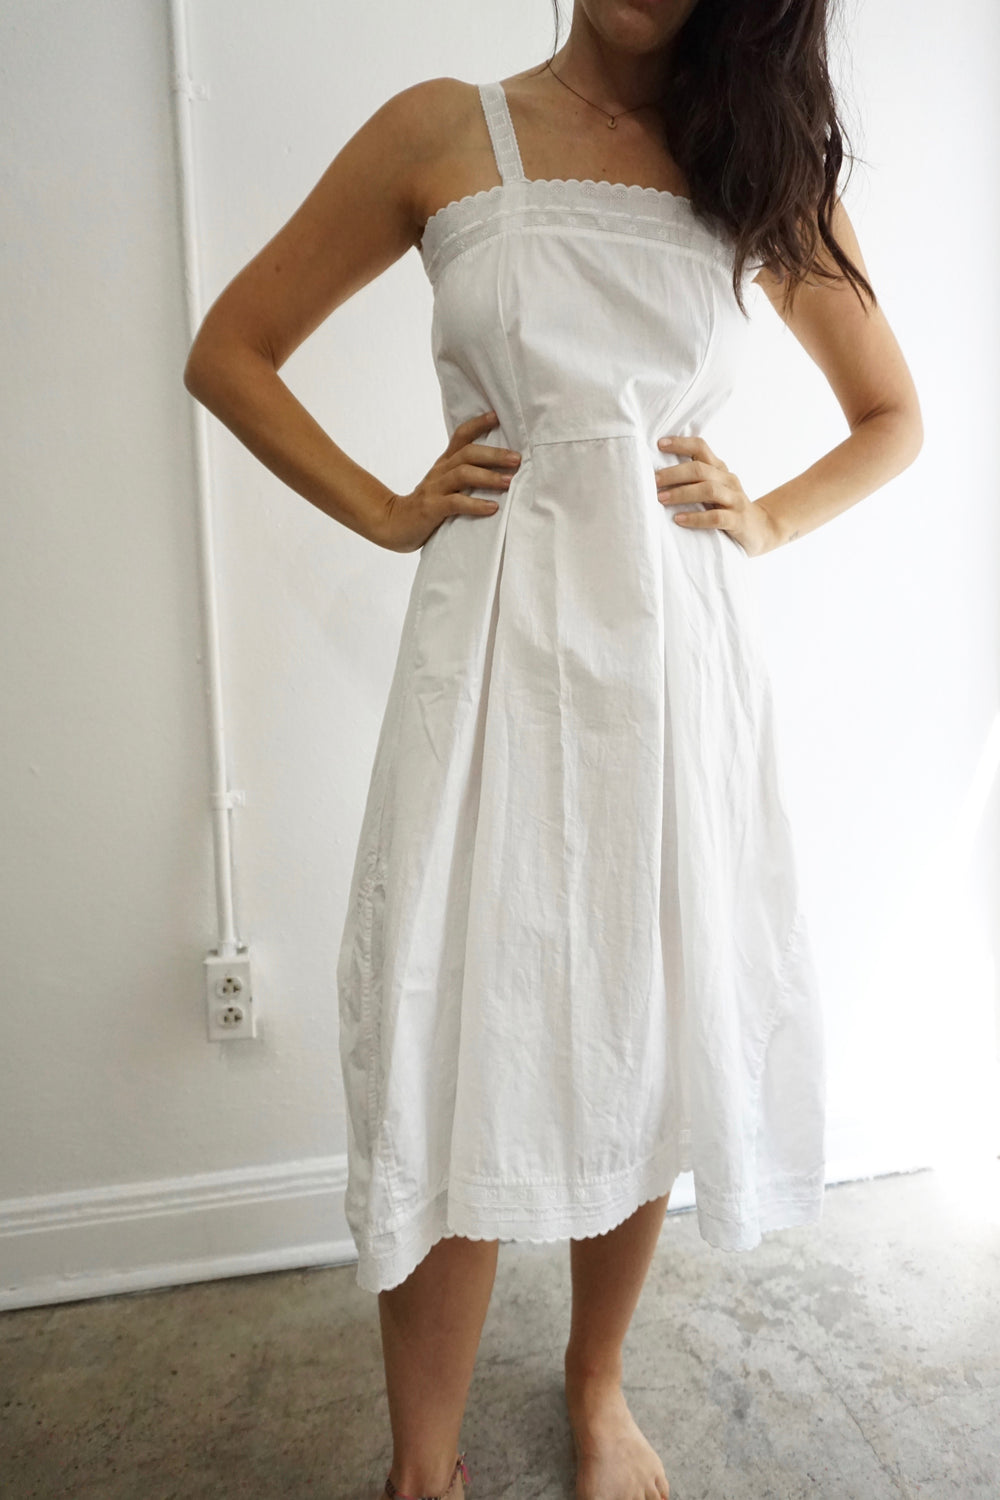 Antique White Cotton Slip Dress